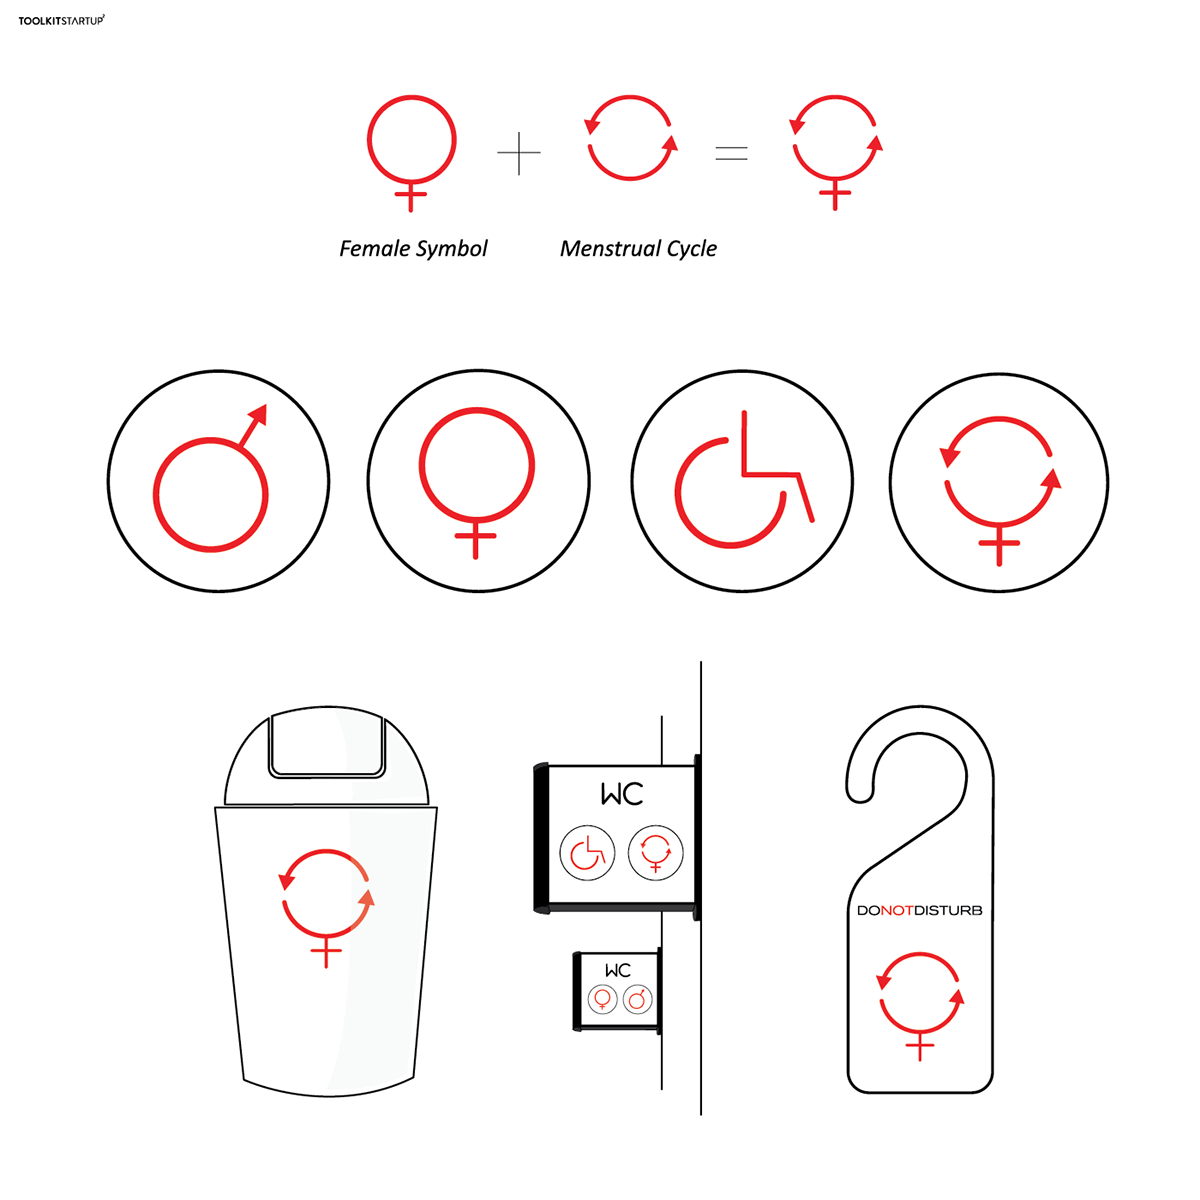 Workshop Greece toolkit toolkit startup THESSALONIKI symbols icons pictograms